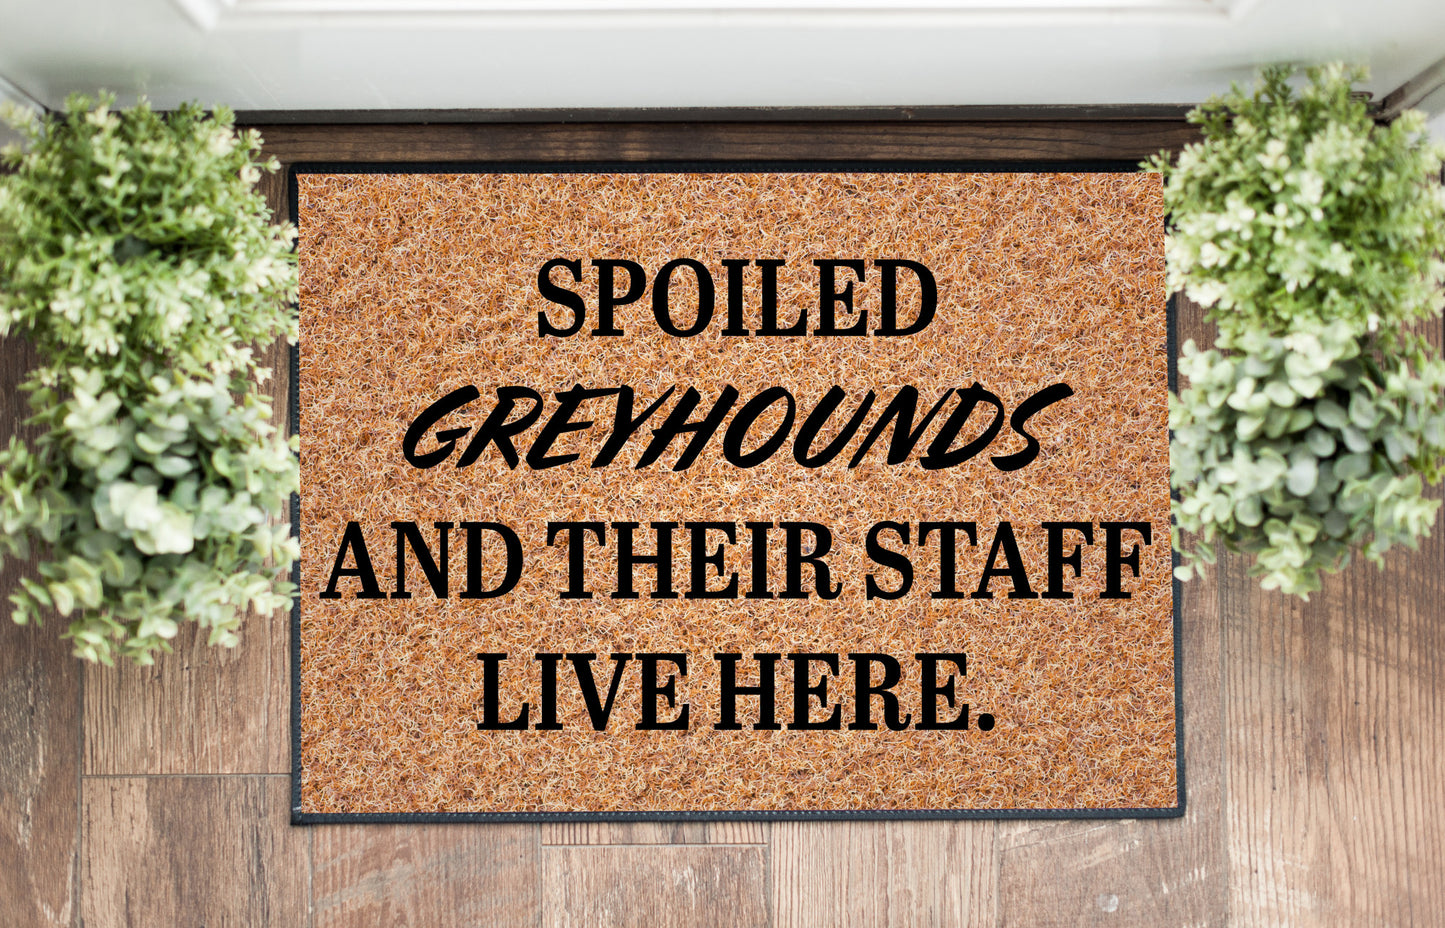 Spolied Greyhounds Door Mat